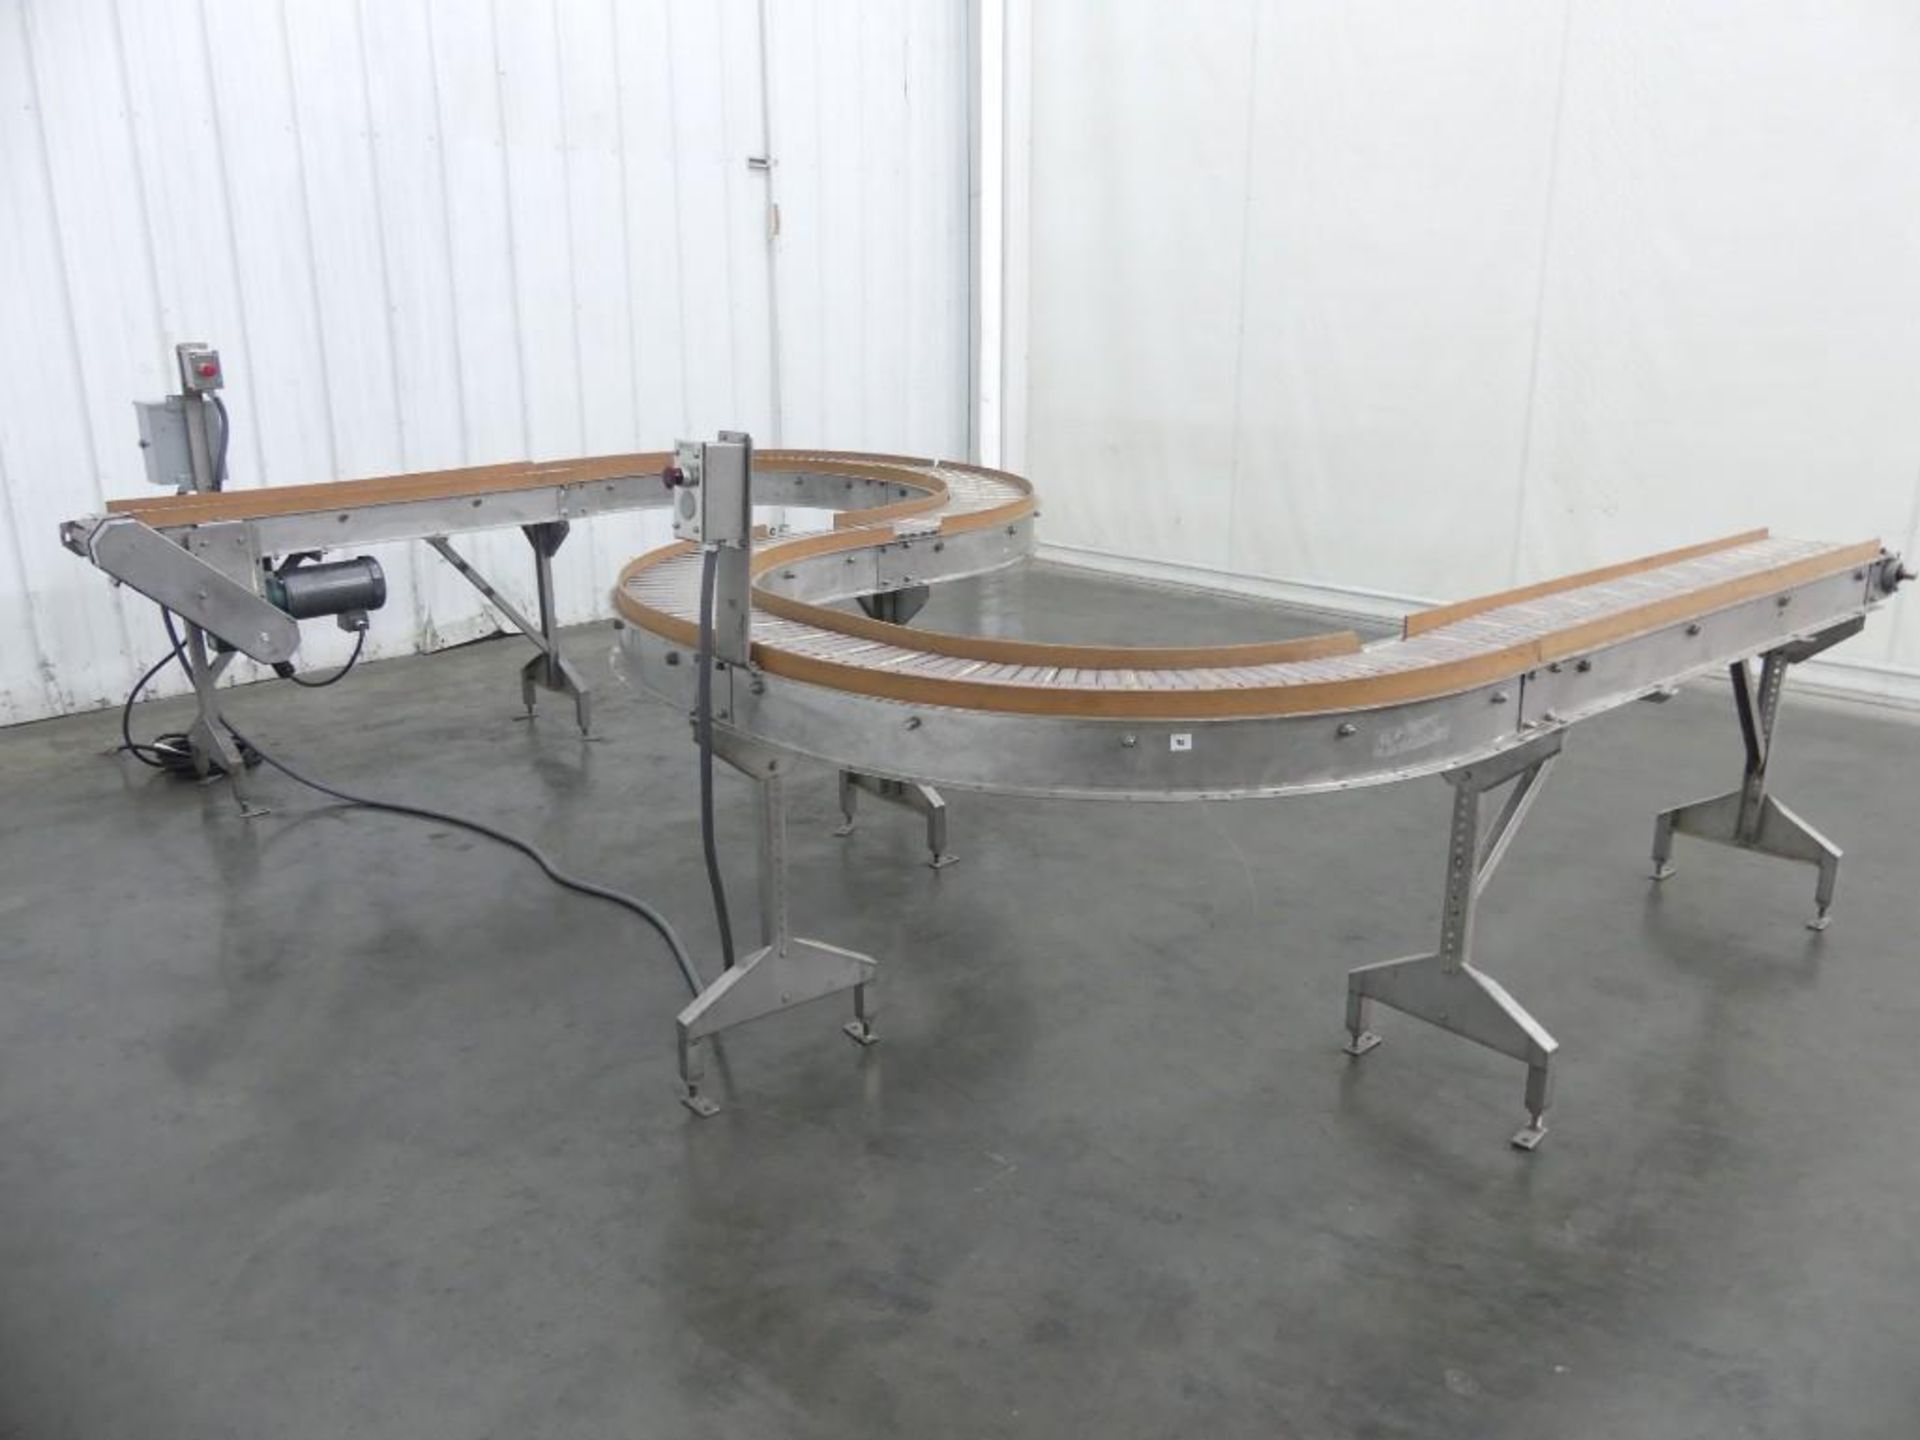 Serpentine Table-Top Conveyor 10" Wide x 32' Long - Image 2 of 23